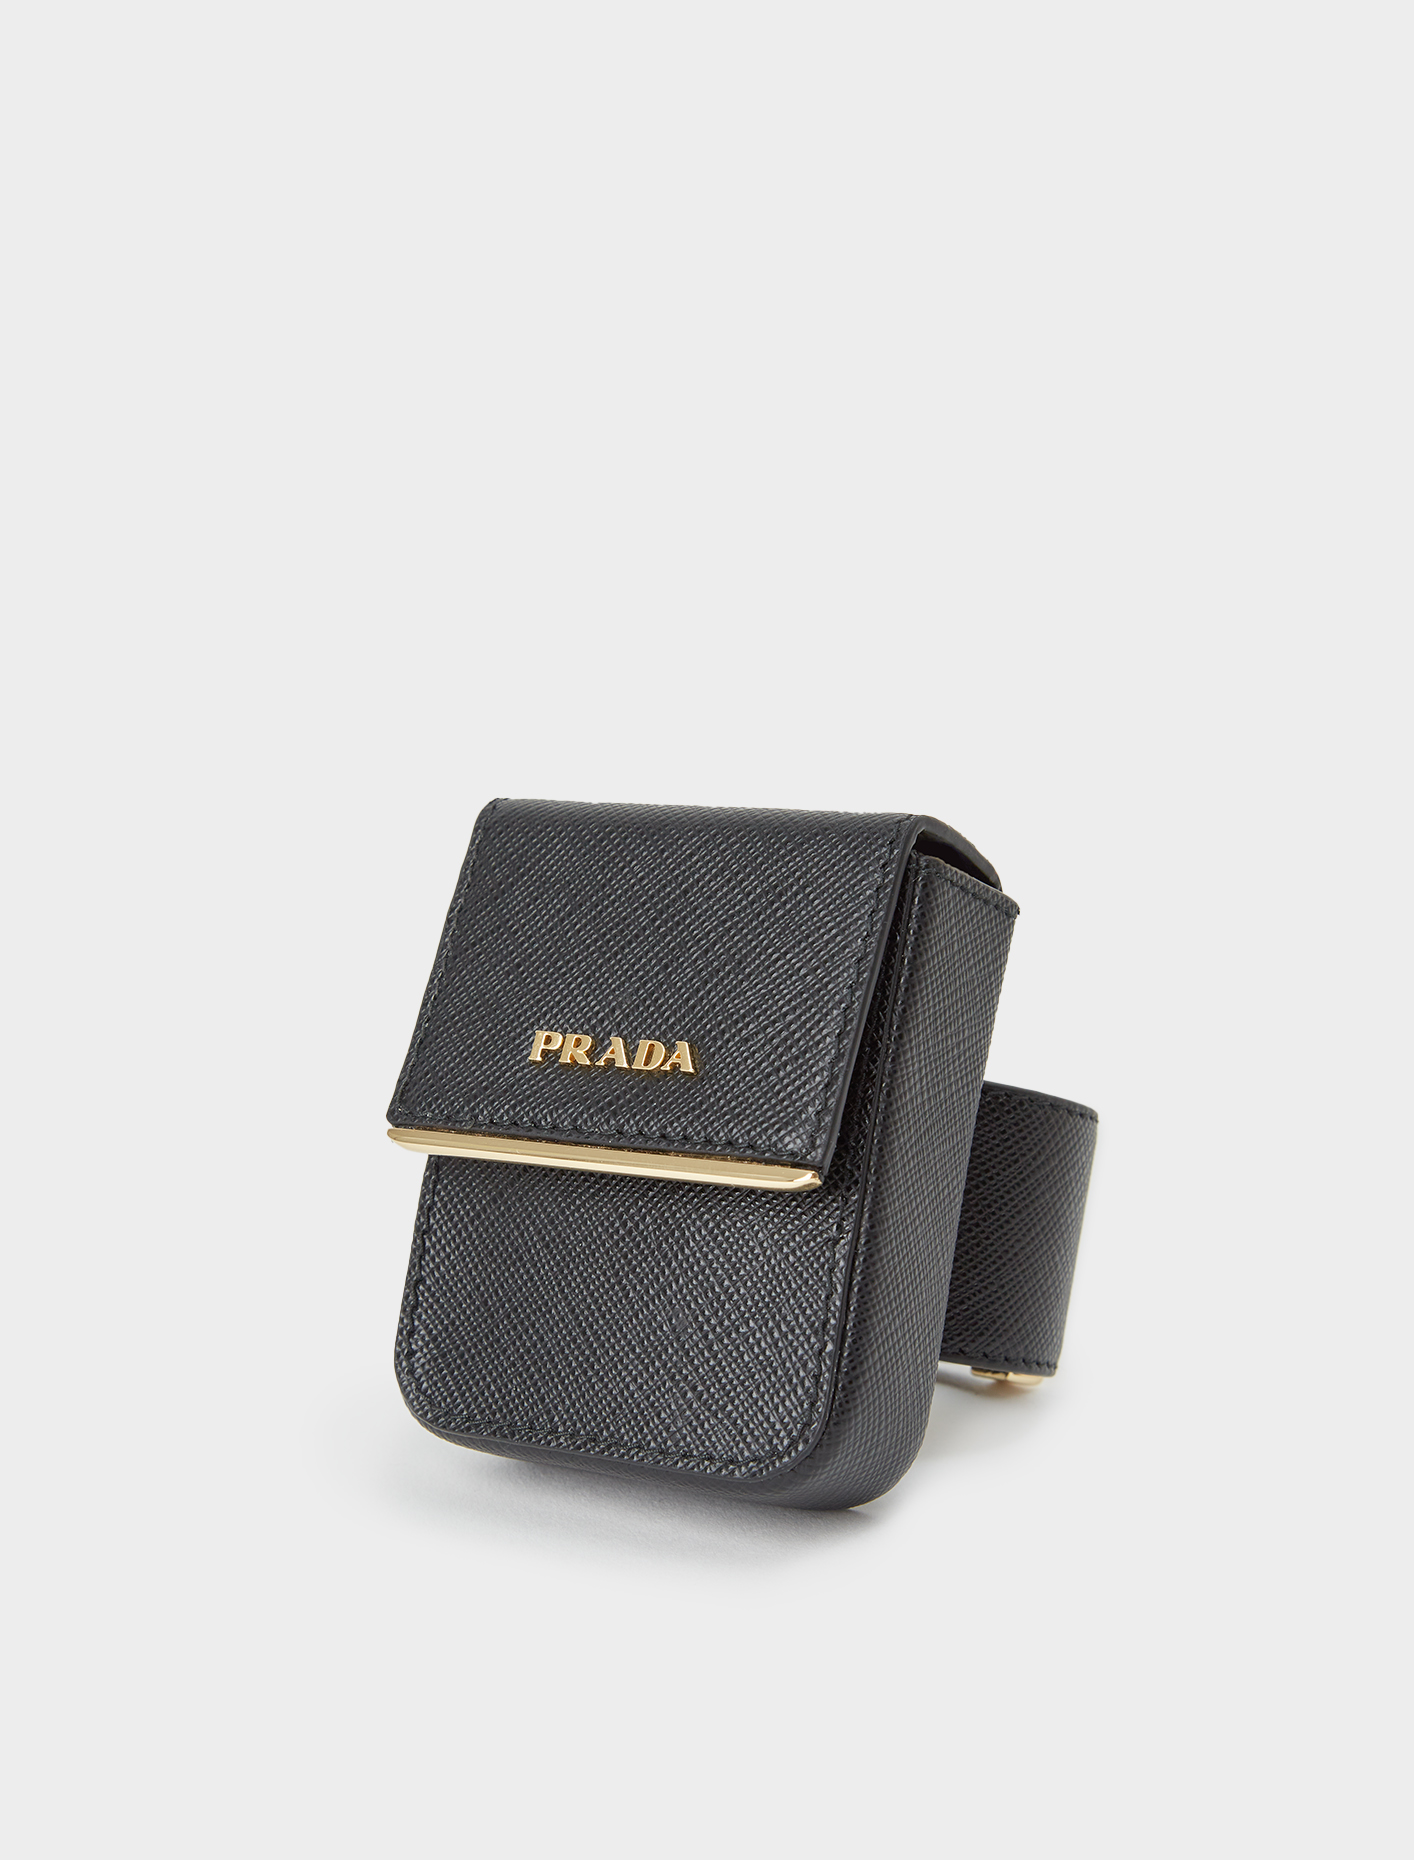 prada leather pouch